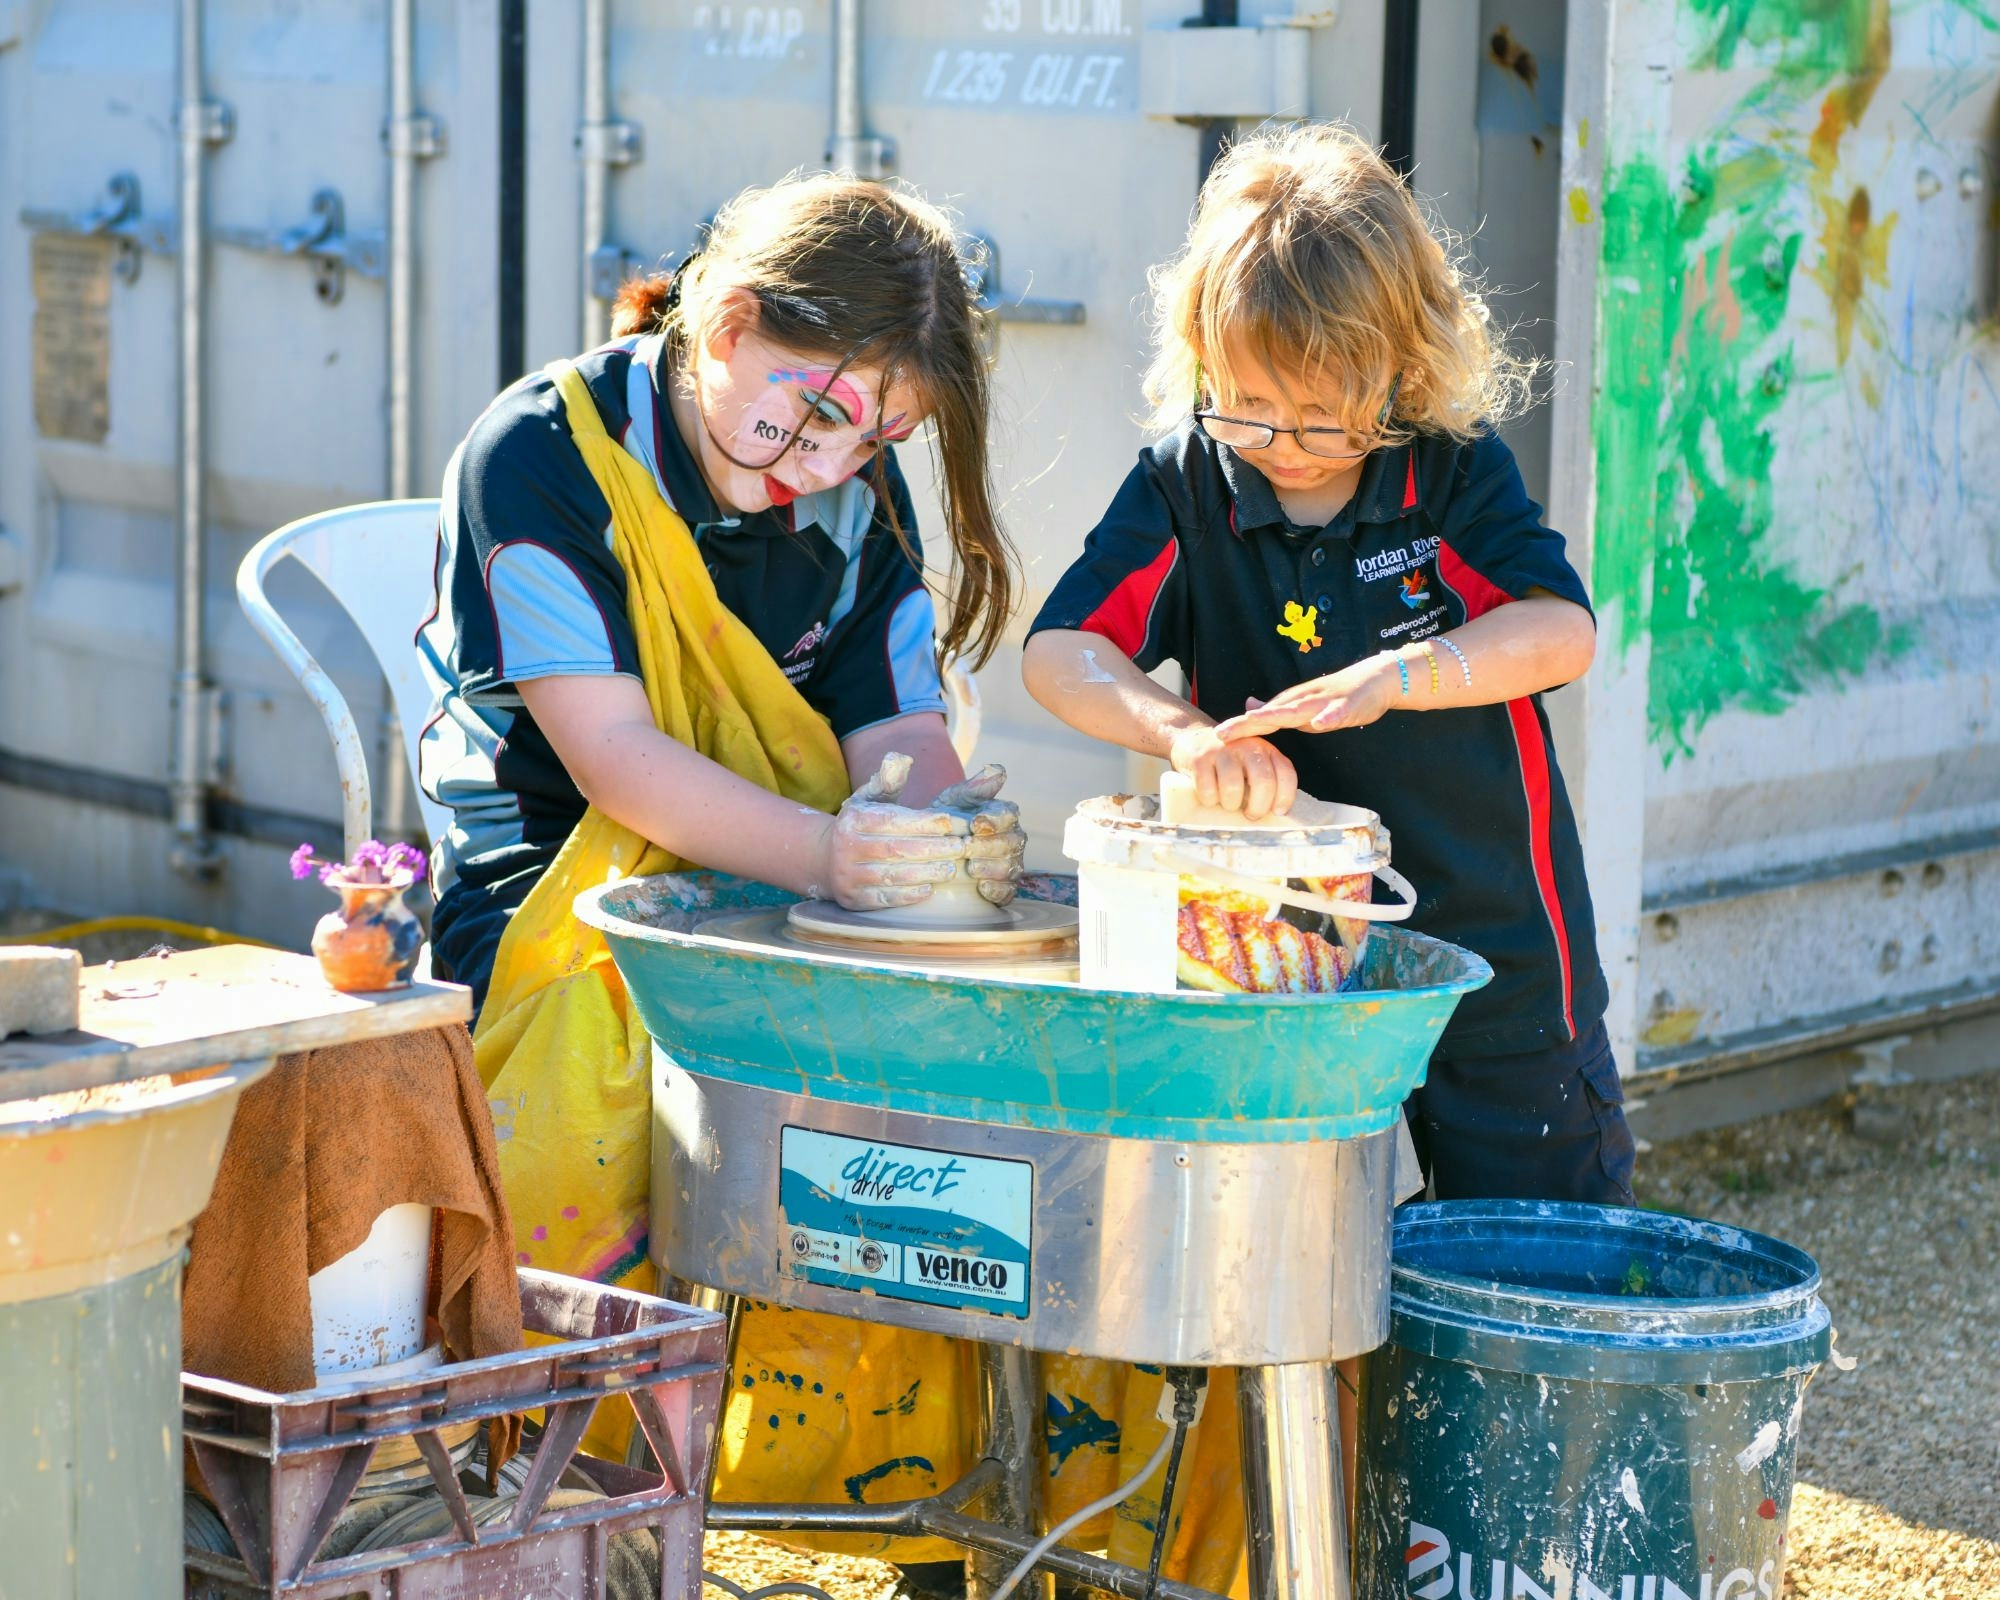 Children on the pottery wheel